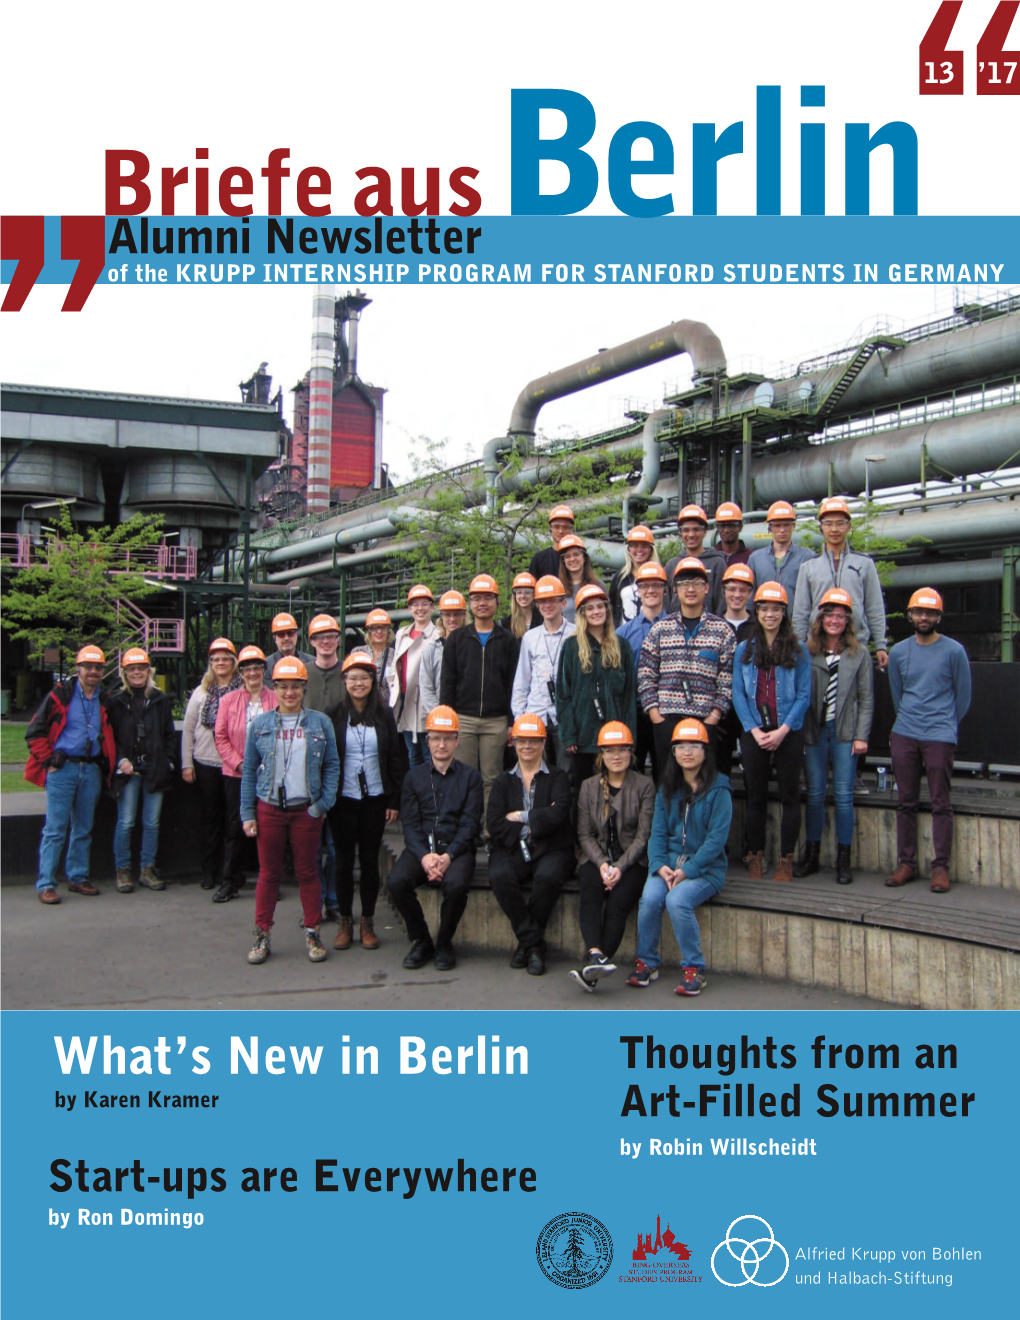 Briefe Ausberlin Alumni Newsletter of the KRUPP INTERNSHIP PROGRAM for STANFORD STUDENTS in GERMANY